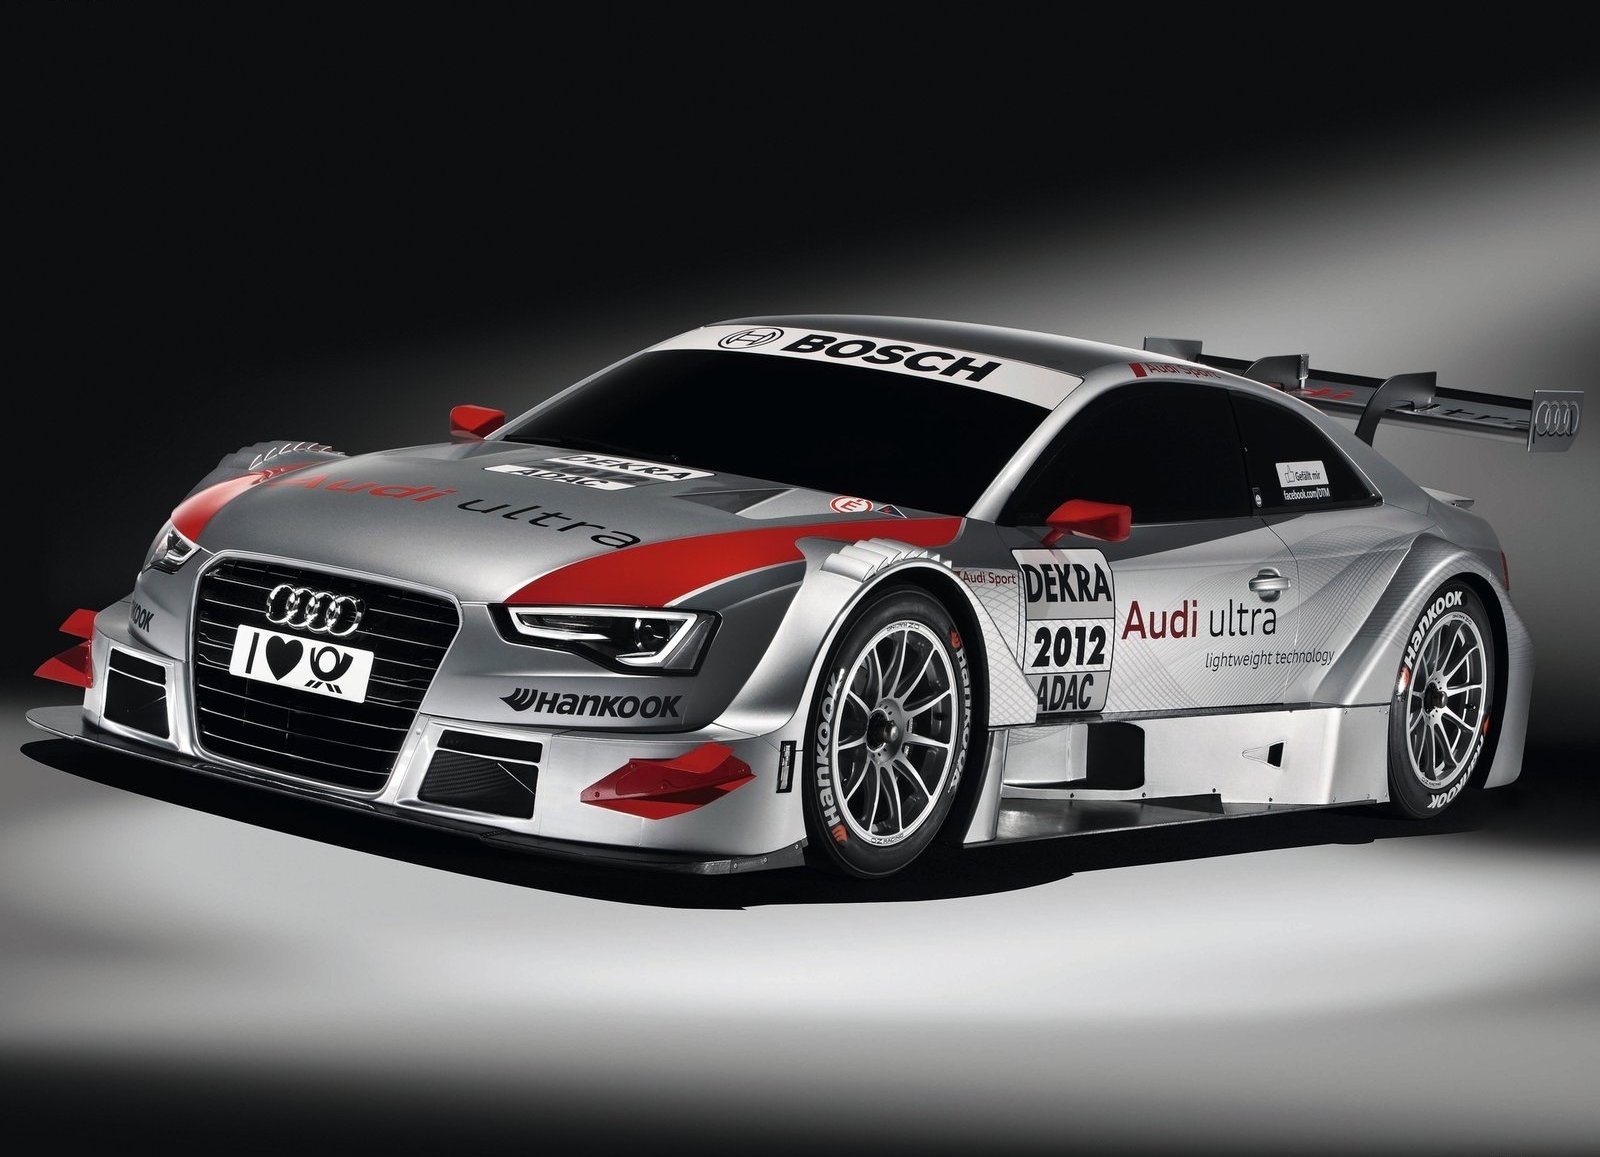 Audi A5 Dtm Wallpaper Car Pictures Image Gaddidekho